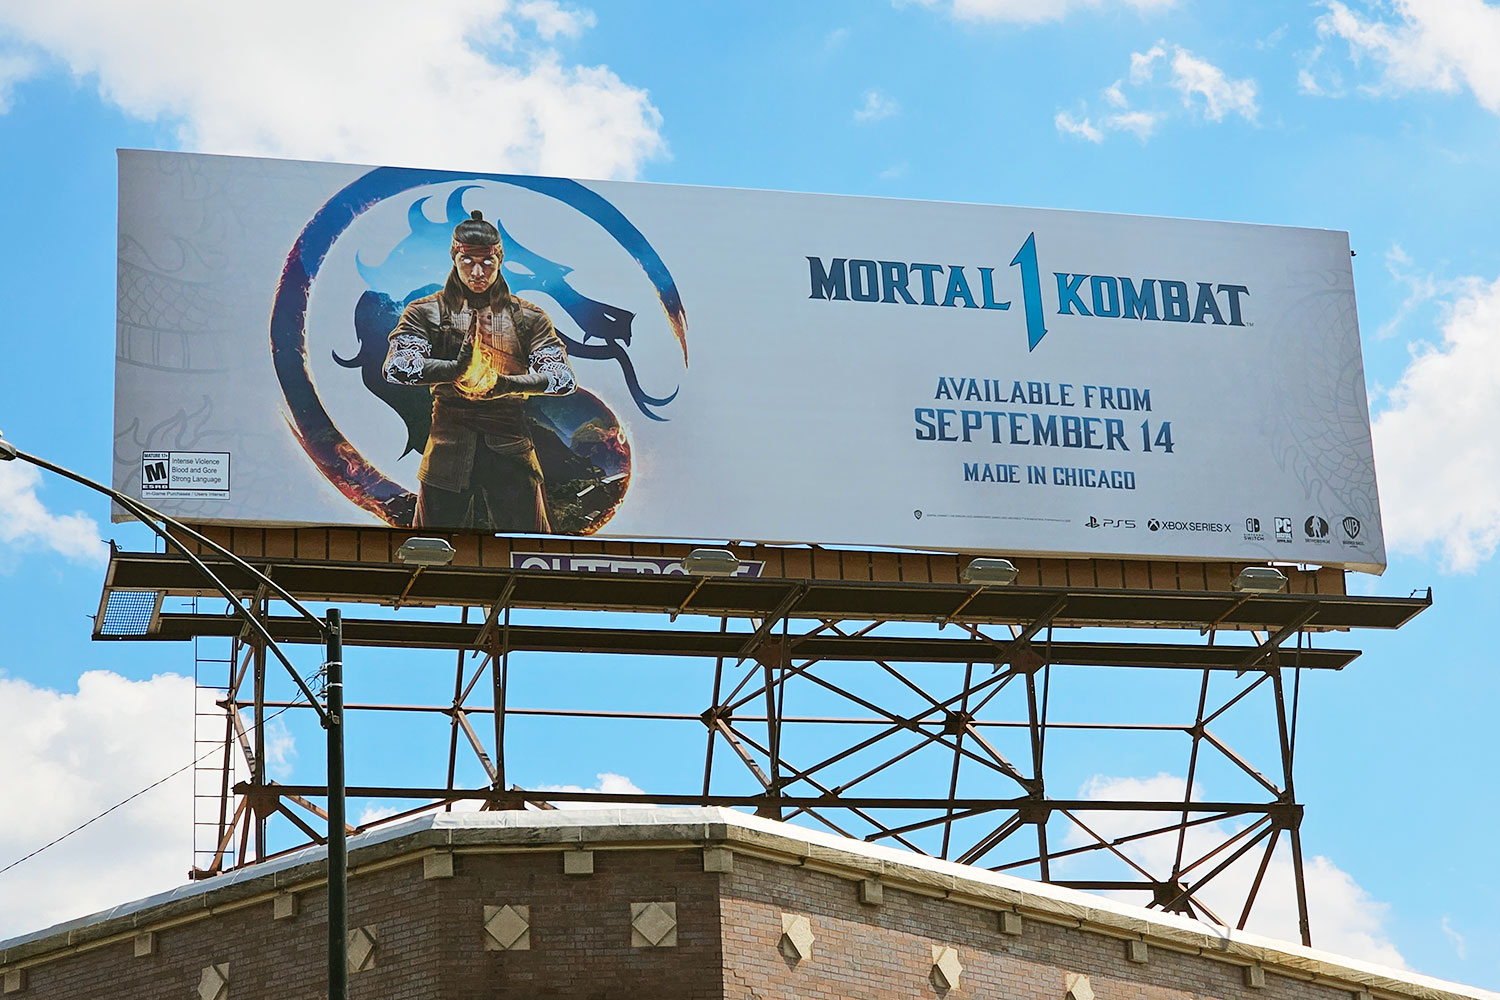 《Mortal Kombat》是芝加哥的出口 -《芝加哥杂志》